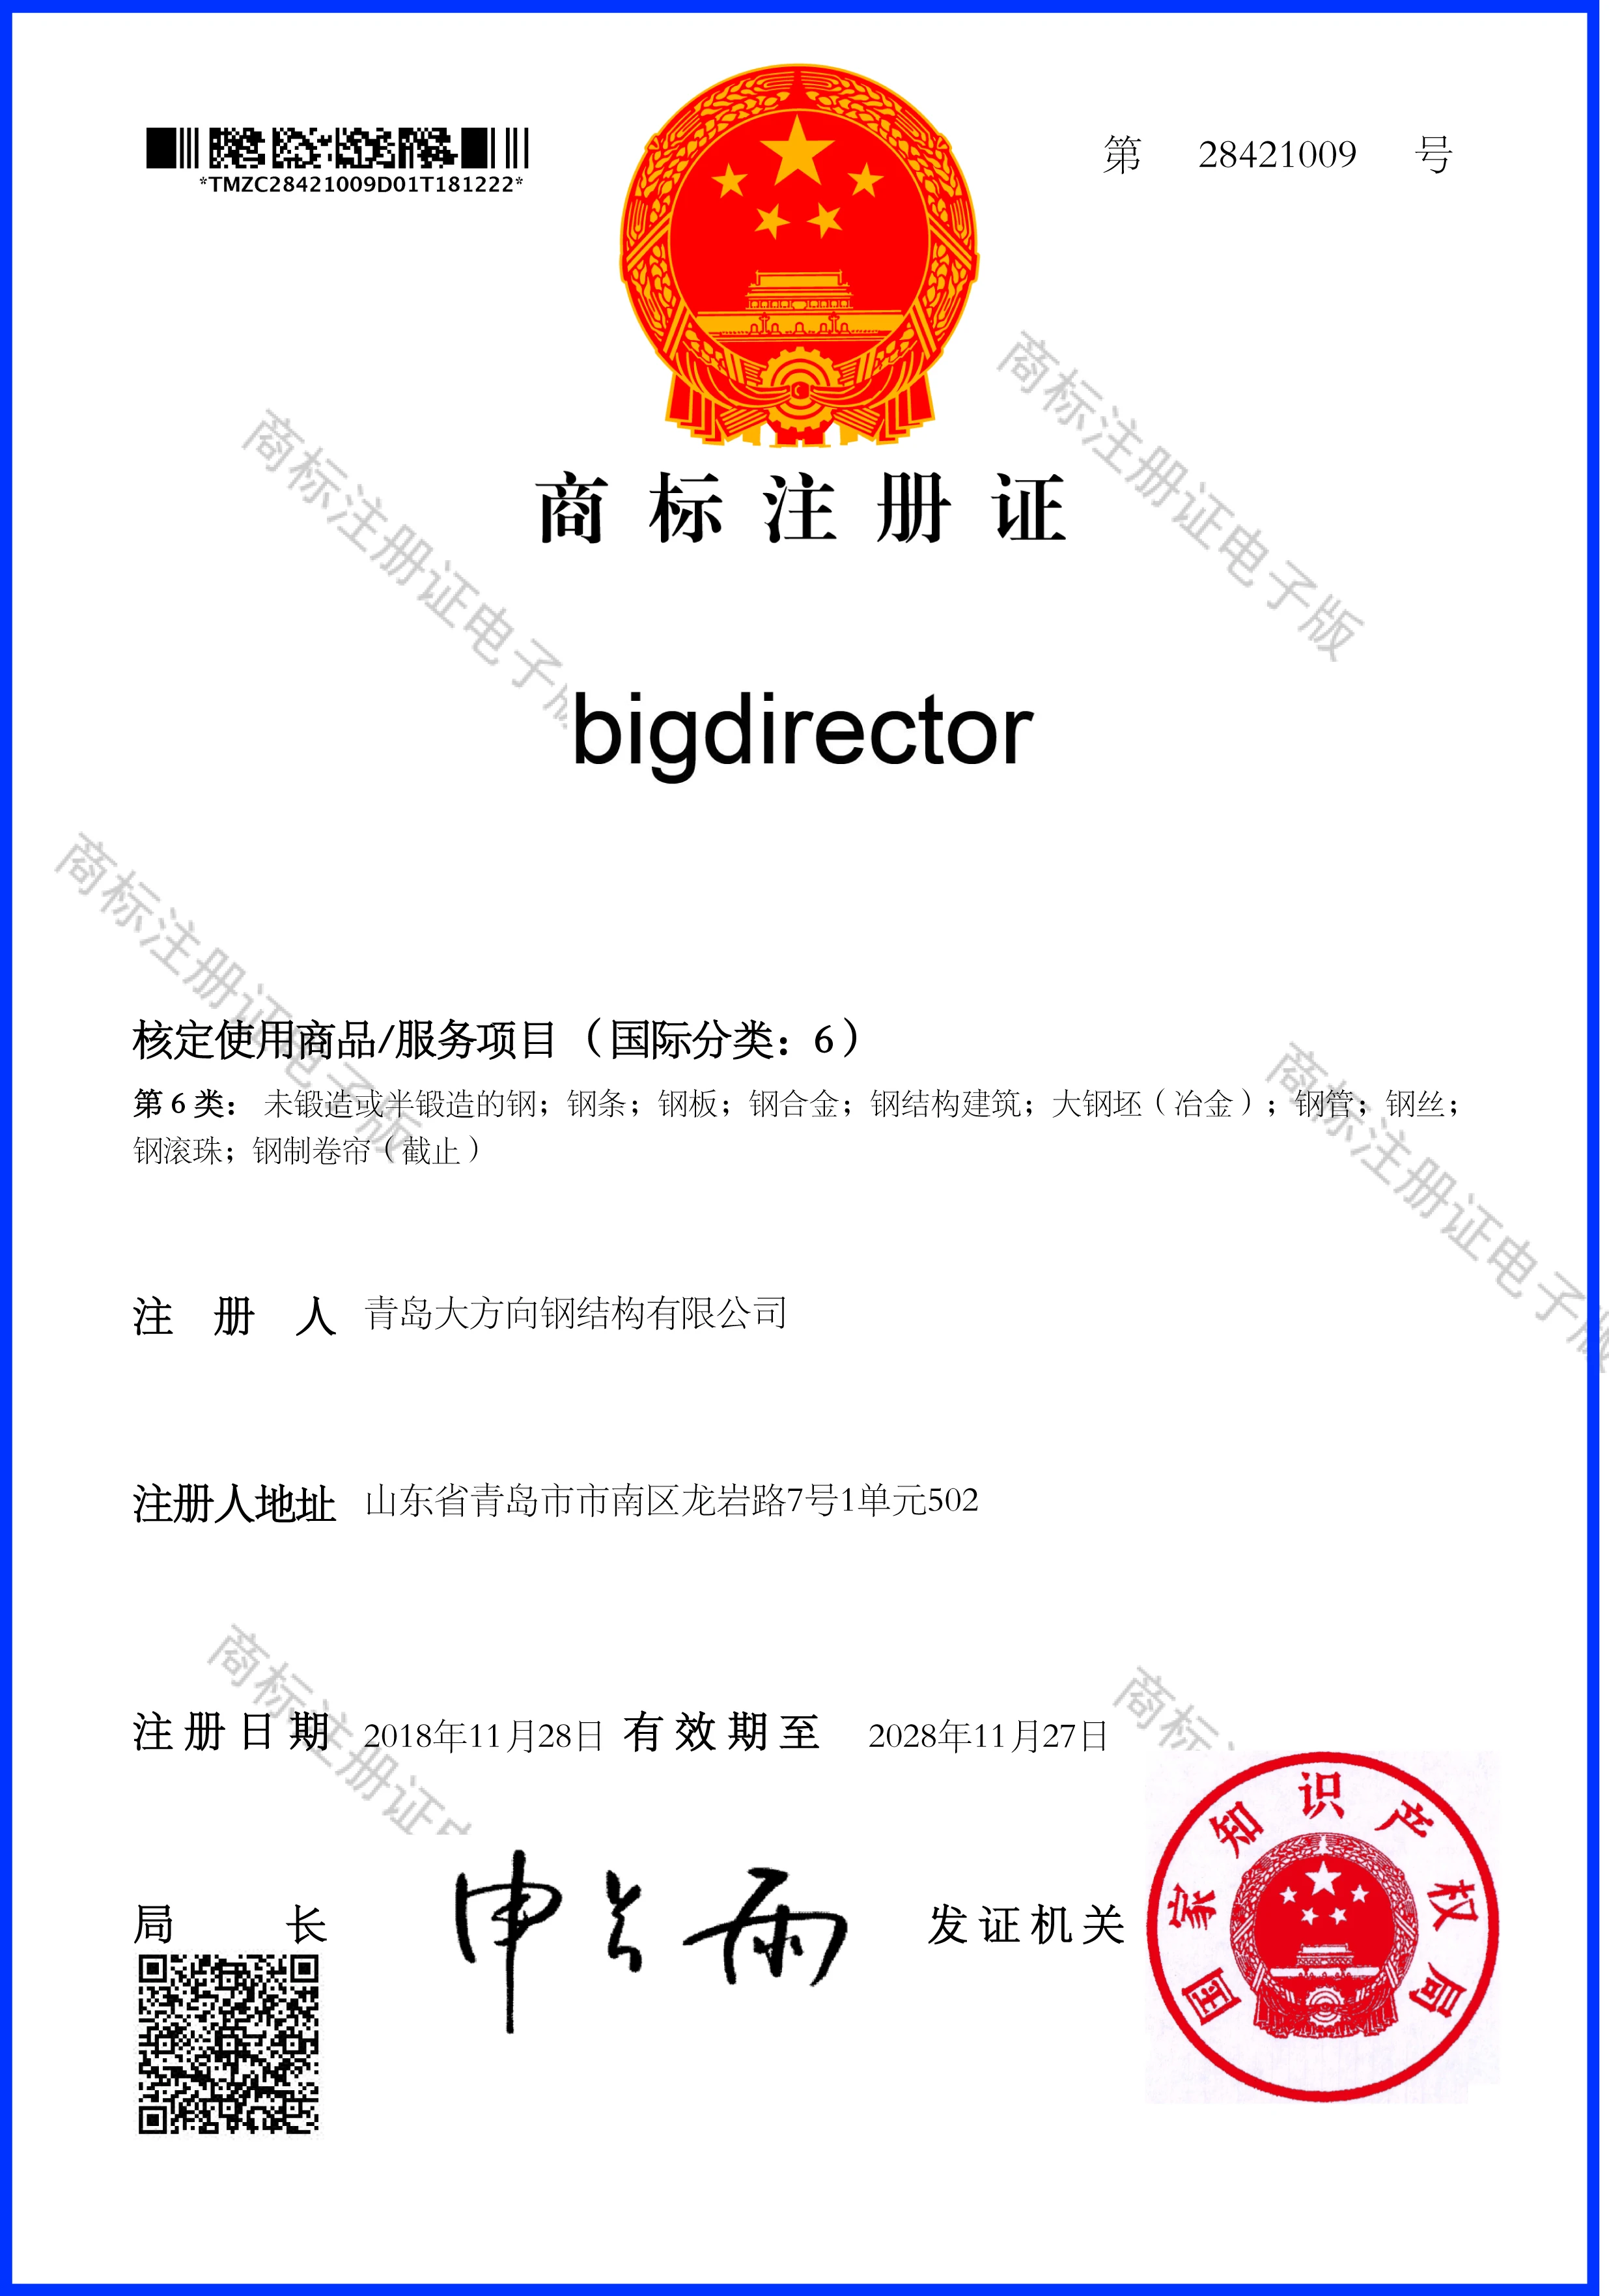 bigdirector